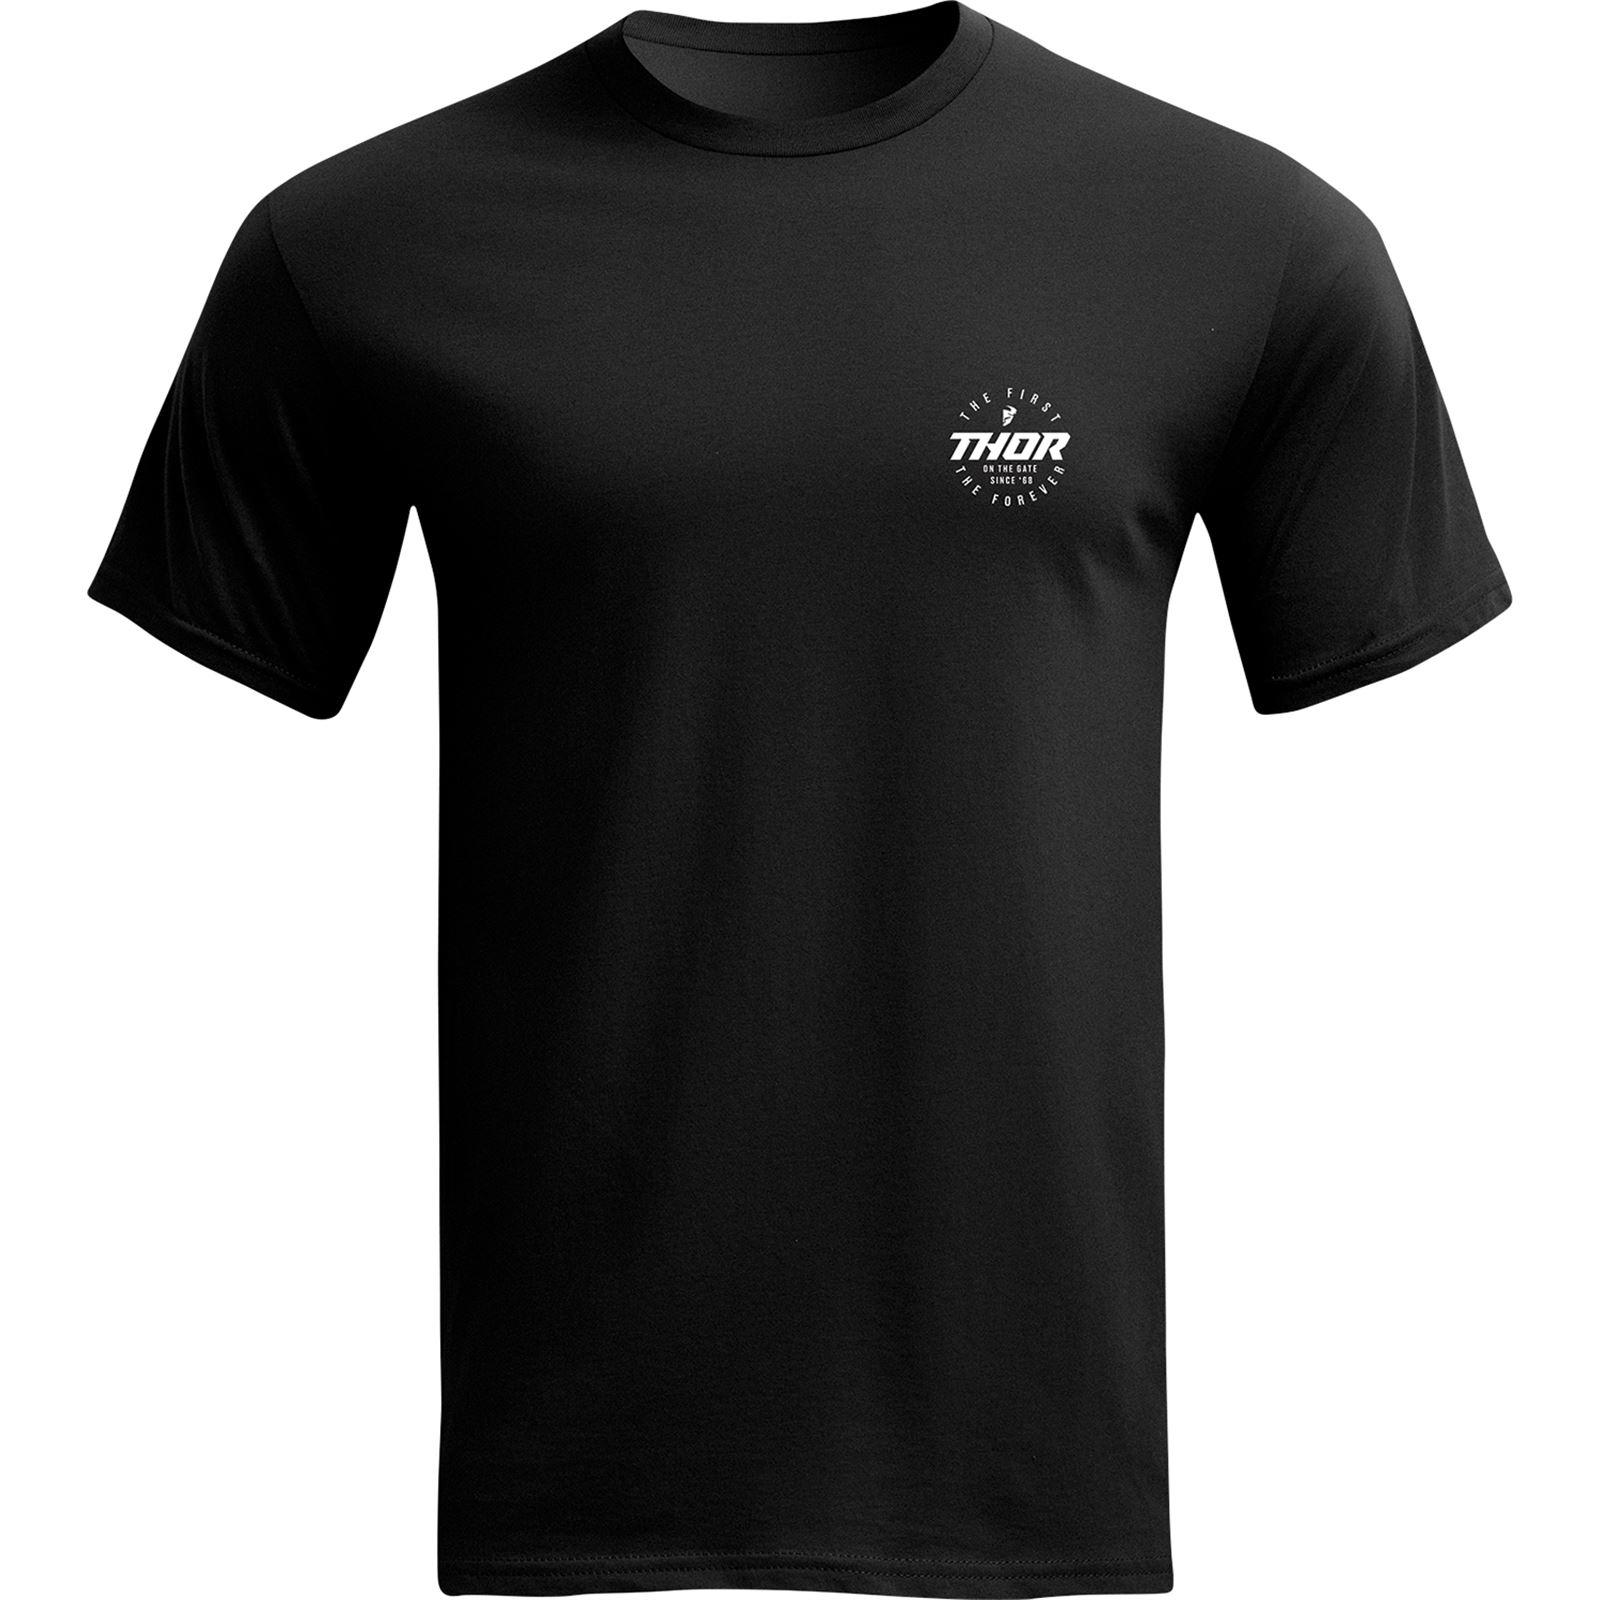 Thor Stadium T-Shirt - Black - 2XL